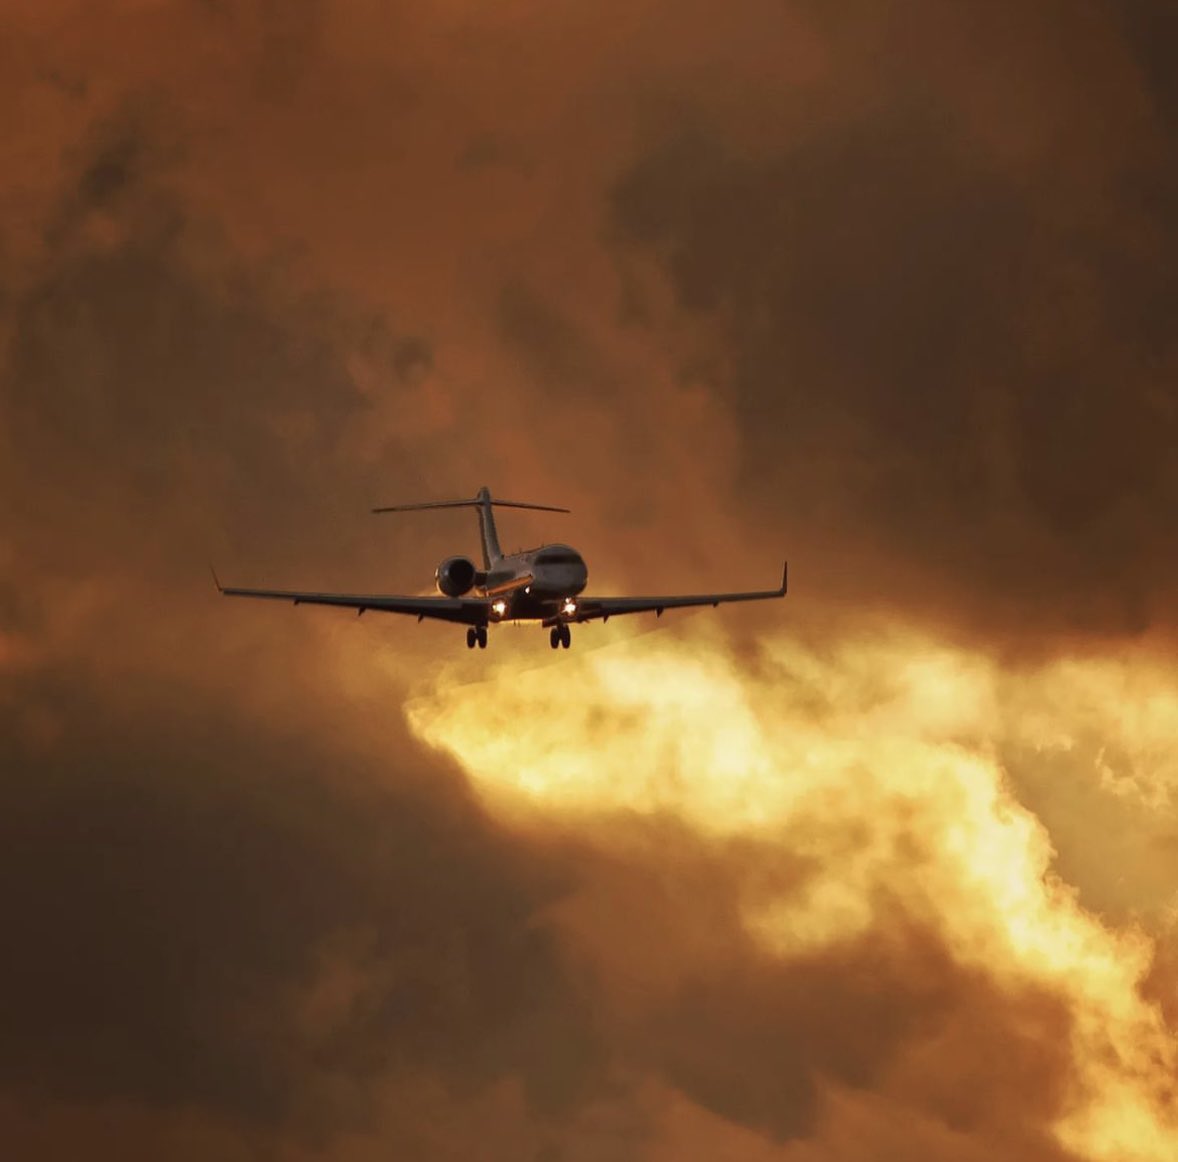 #aviationphotography #bcn #spotting #lebl #bizjet #vipjet #corporatejet #bombardierglobal6000 #clouds #sunset #amazing #travel #canonphoto #mwc #avgeek #airplane #luxury